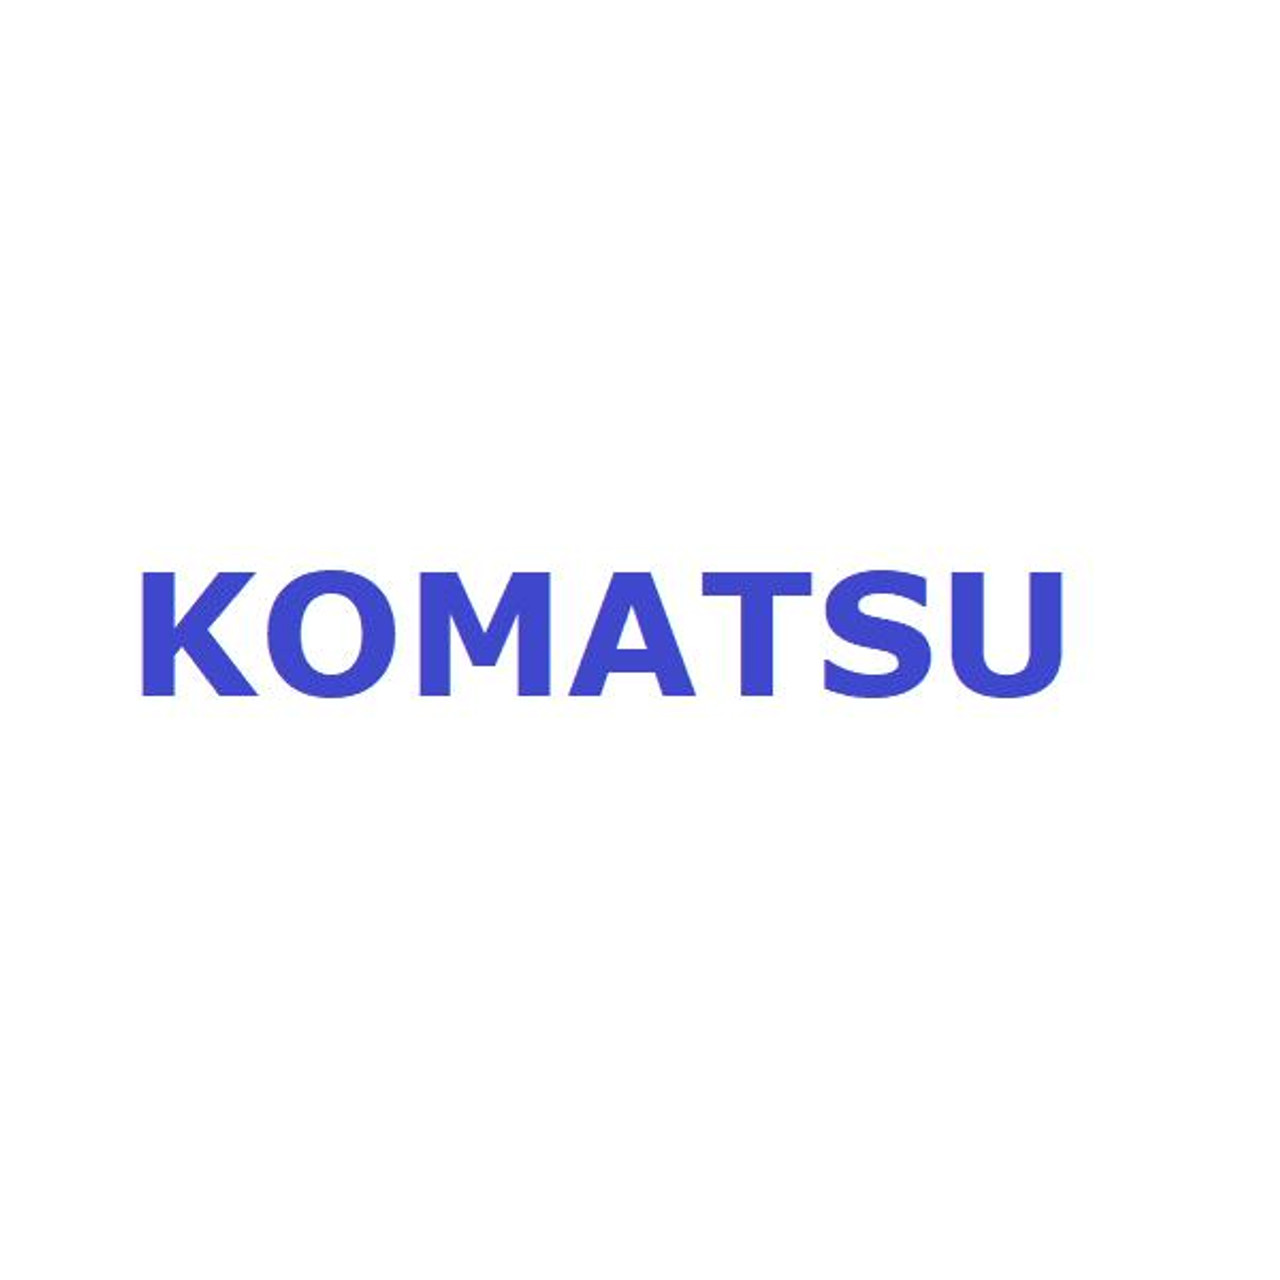 Komatsu Seal # PB9800 U seal 7 x 7.625 x .577